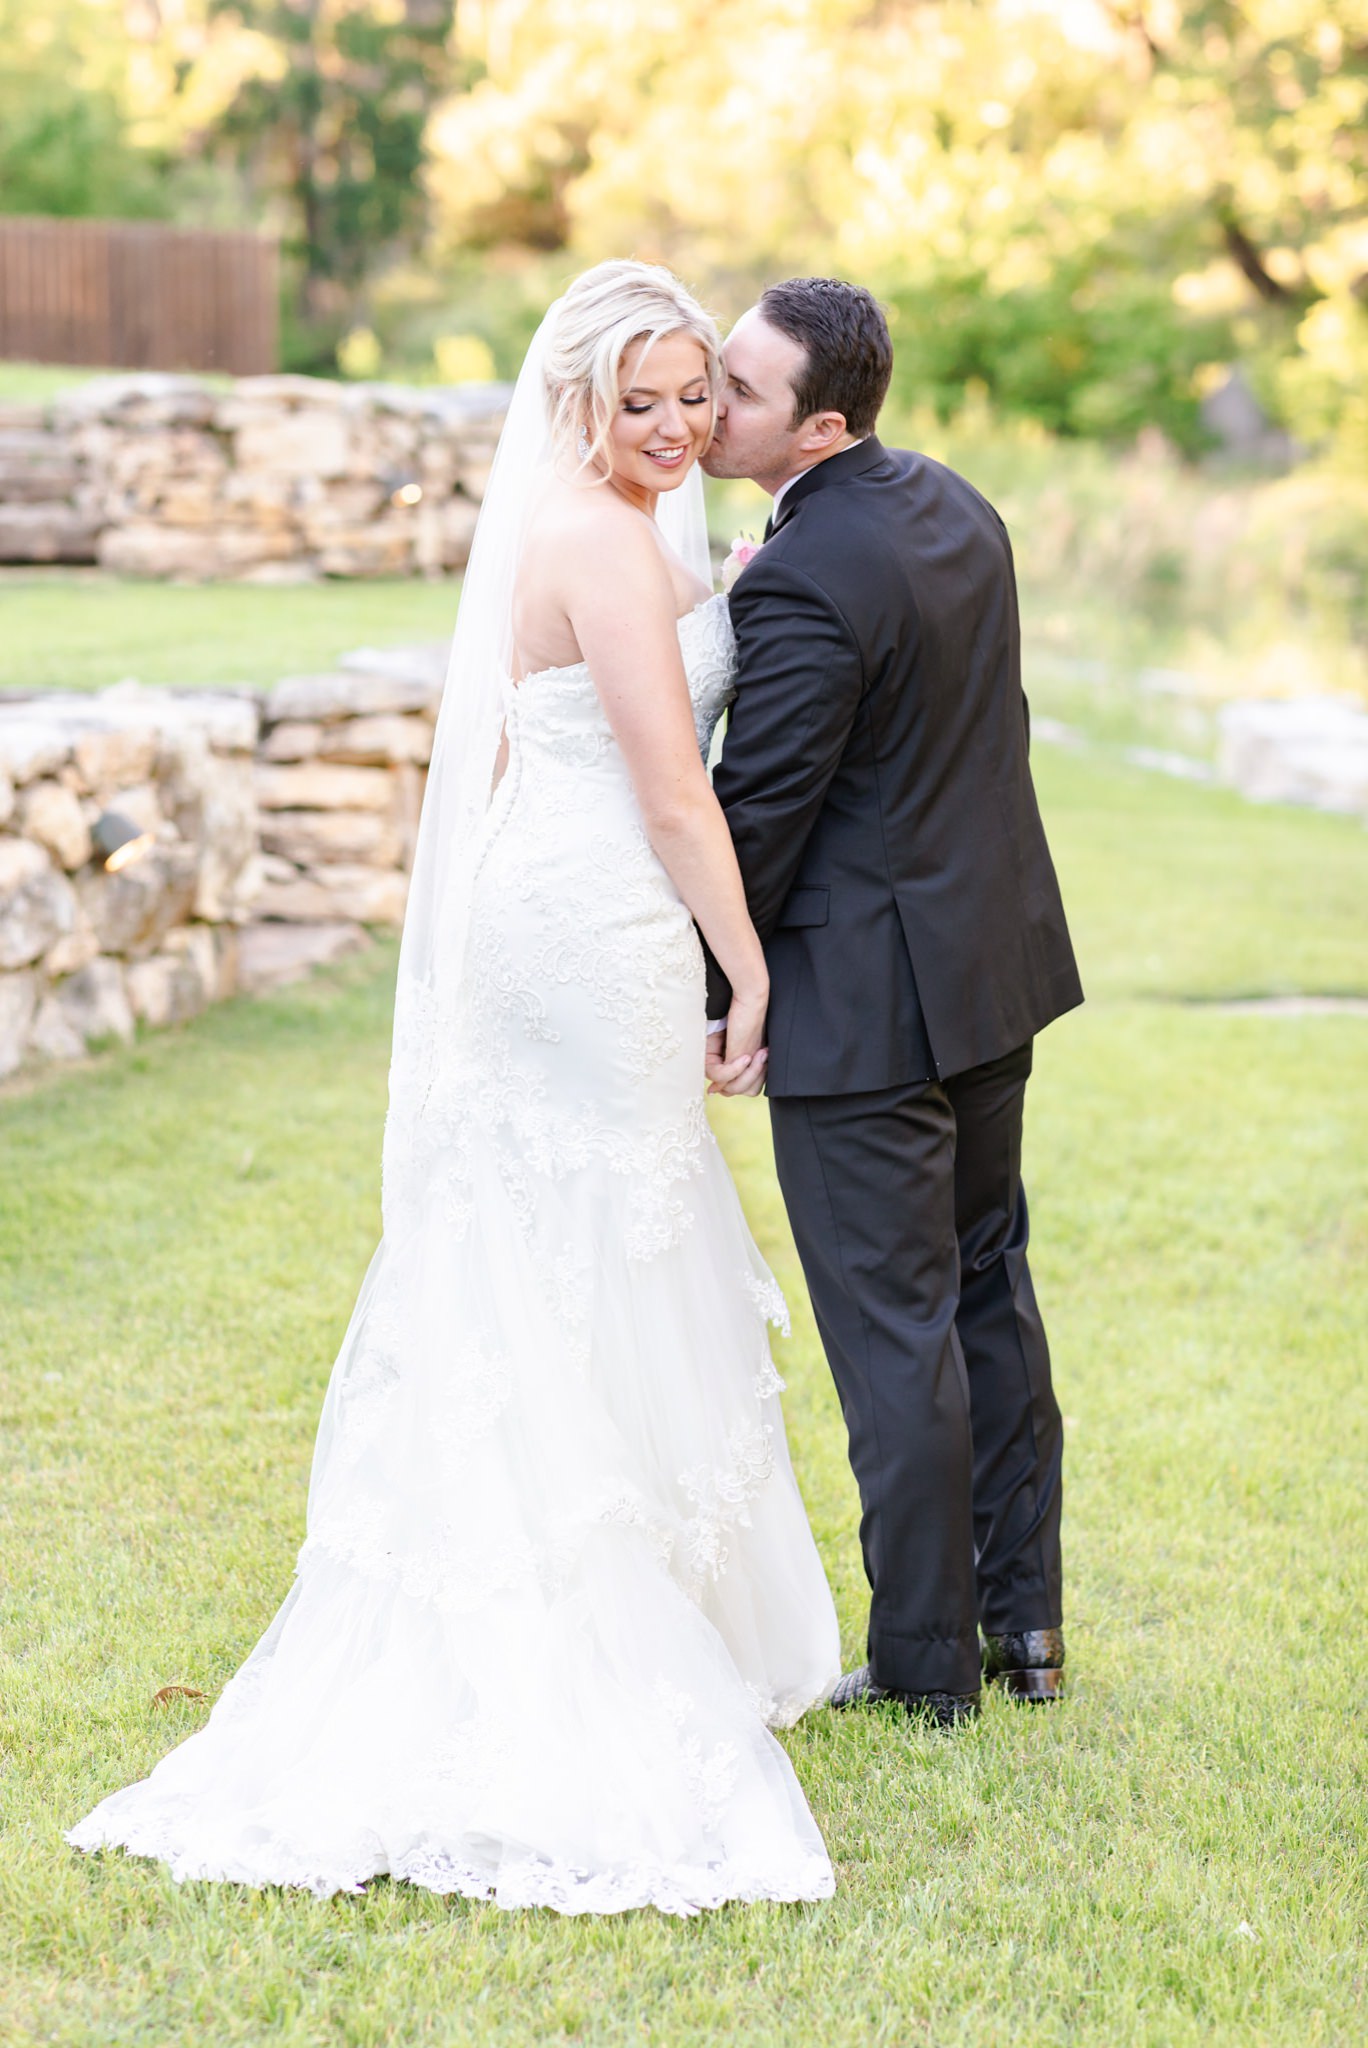 A Classic Rose Gold and Blush Wedding at Remi's Ridge at Hidden Falls in Spring Branch, TX by Dawn Elizabeth Studios, San Antonio Wedding Photographer